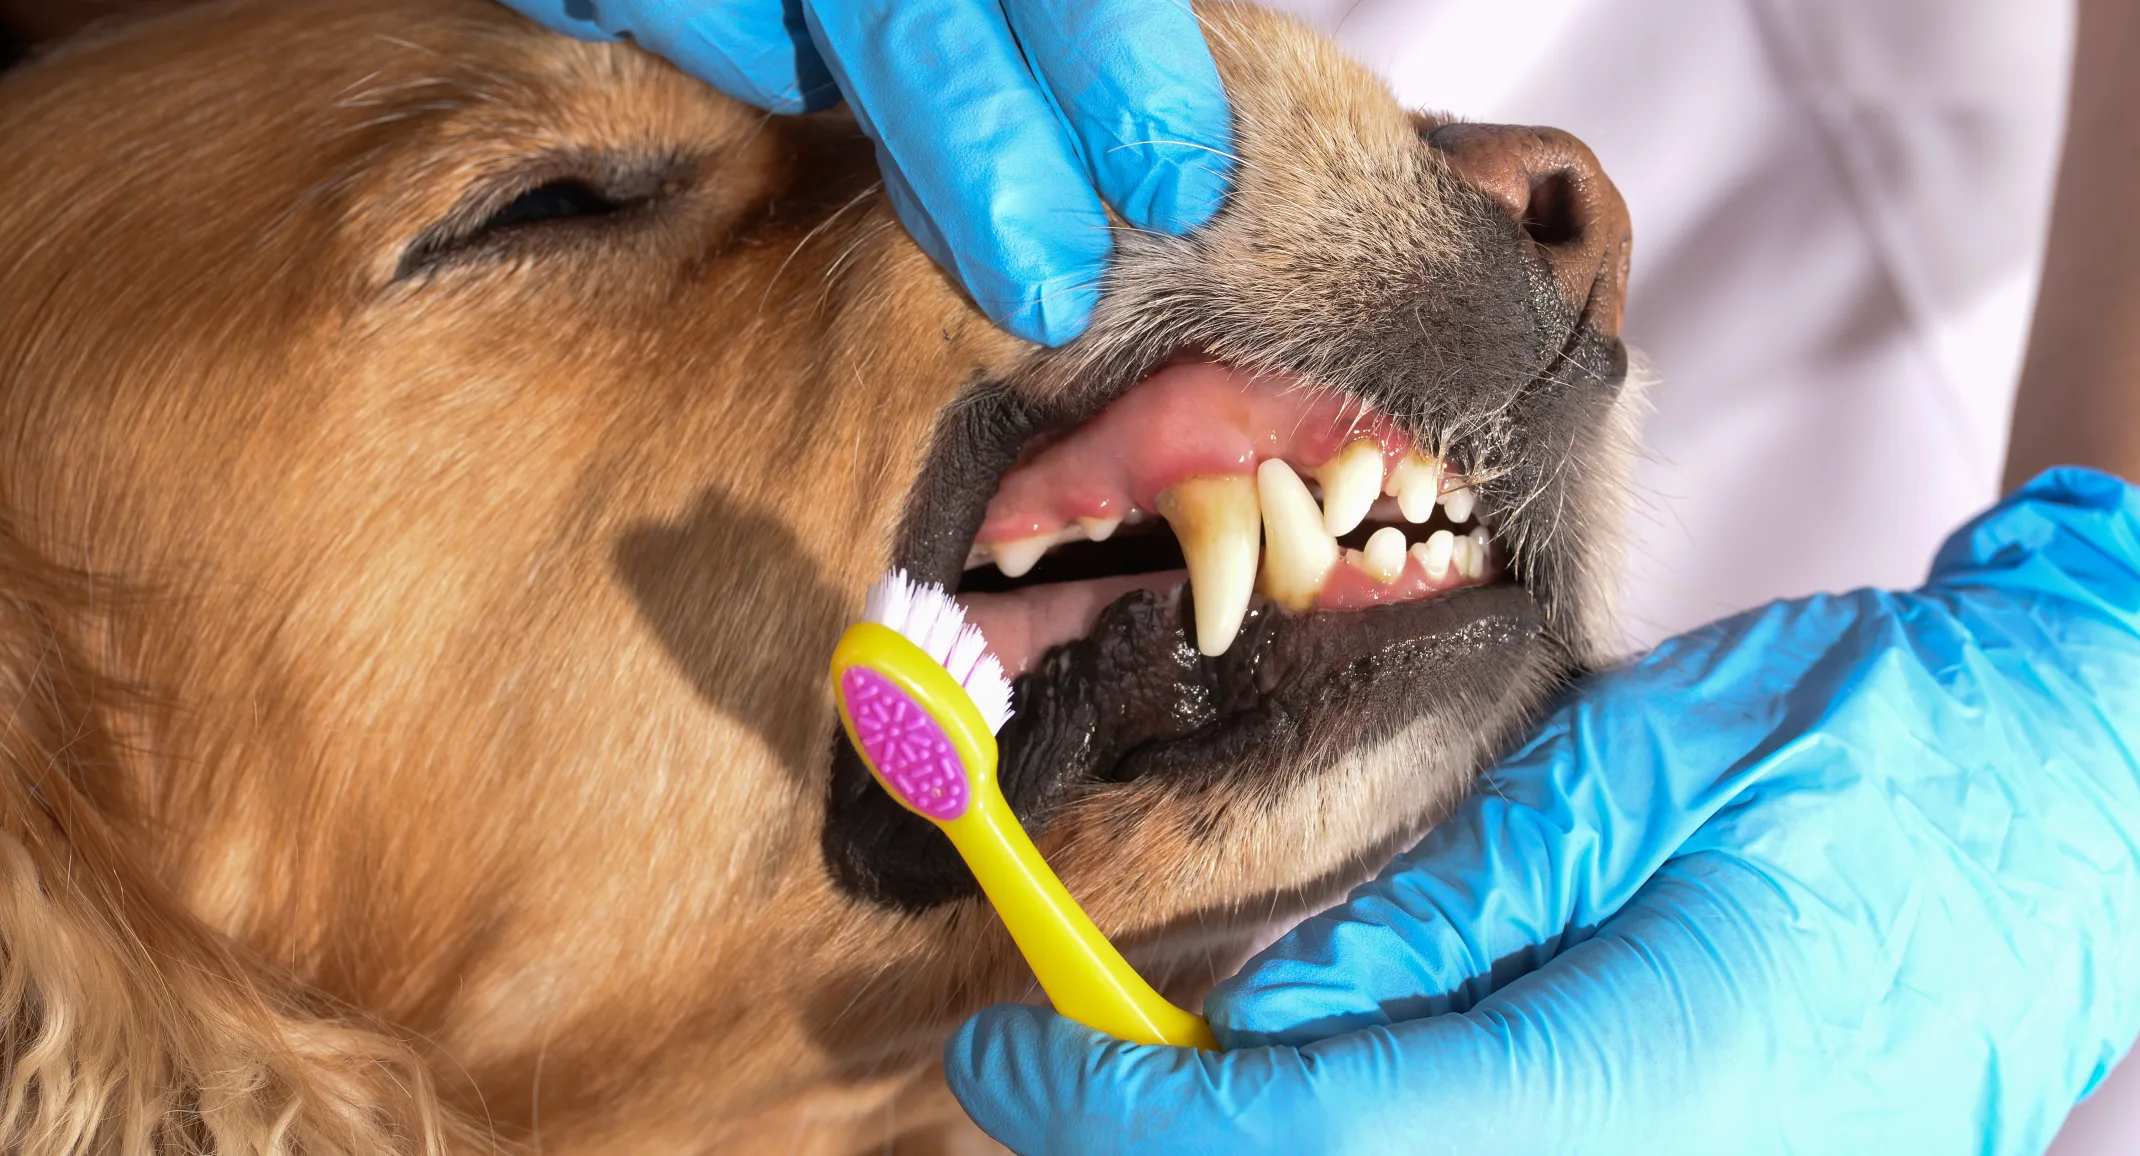 Dog showing teeth dental care